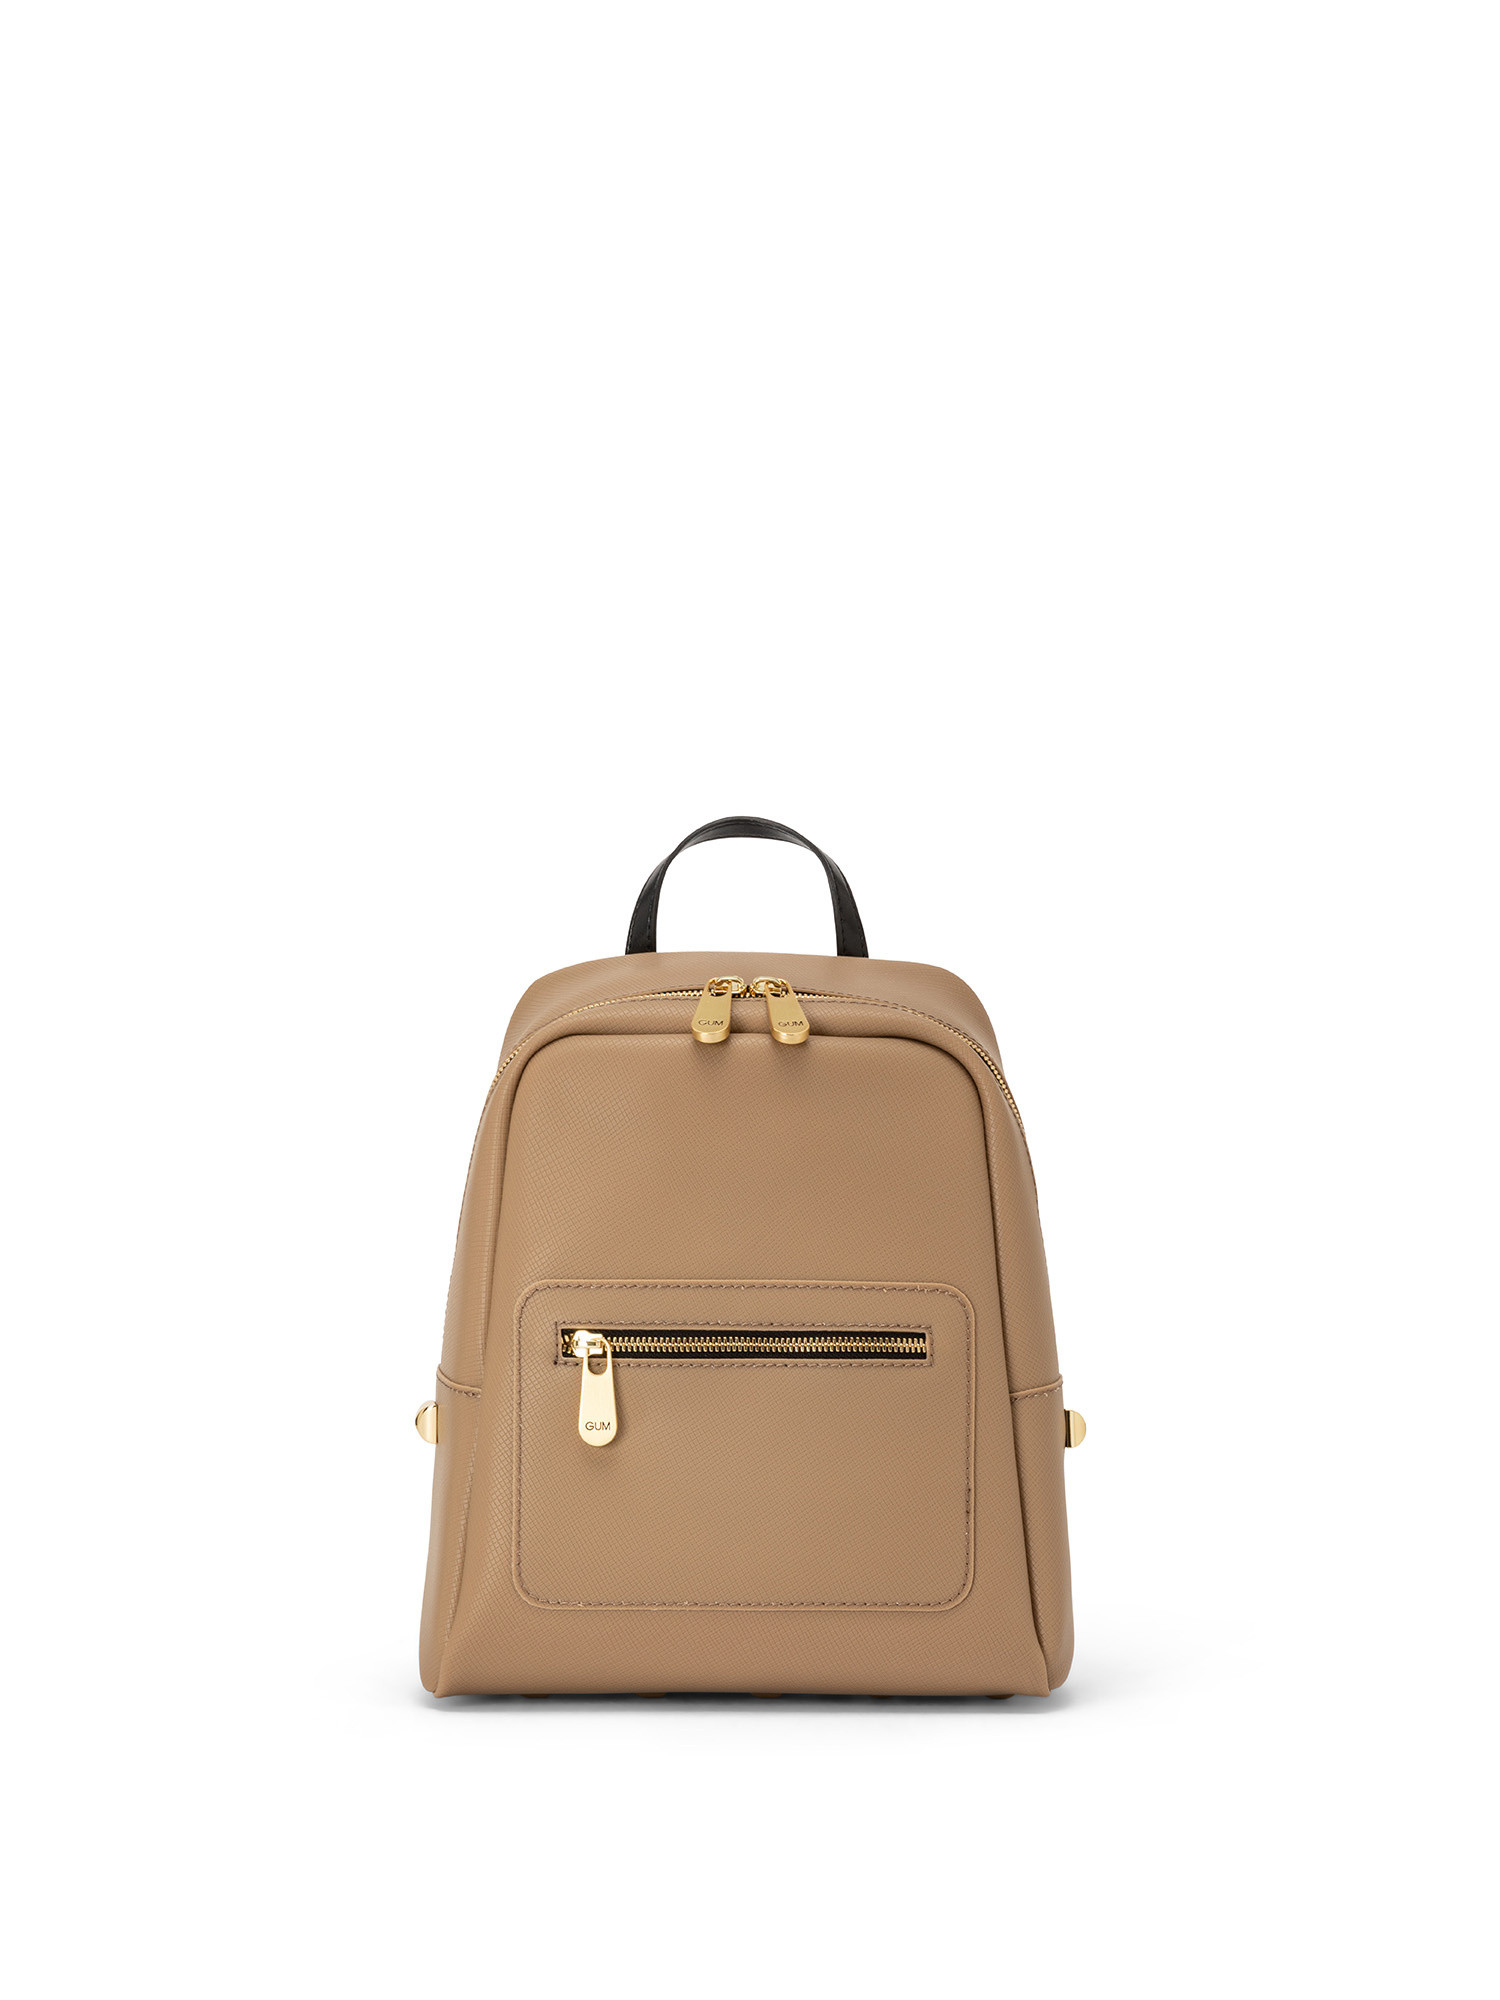 Medium Maxi Studs backpack, Beige, large image number 0